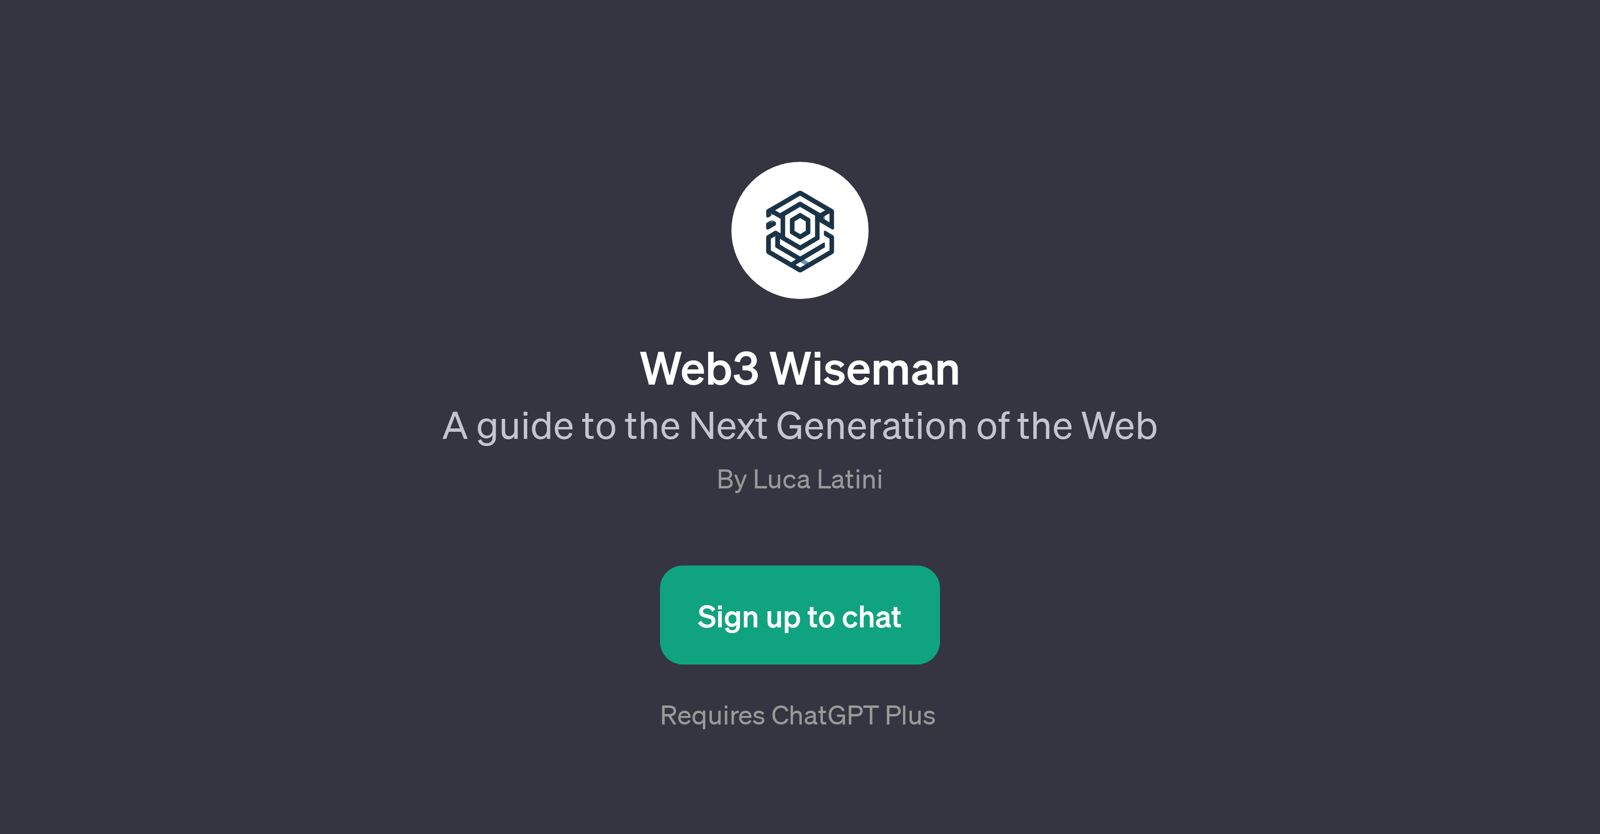 Web3 Wiseman website